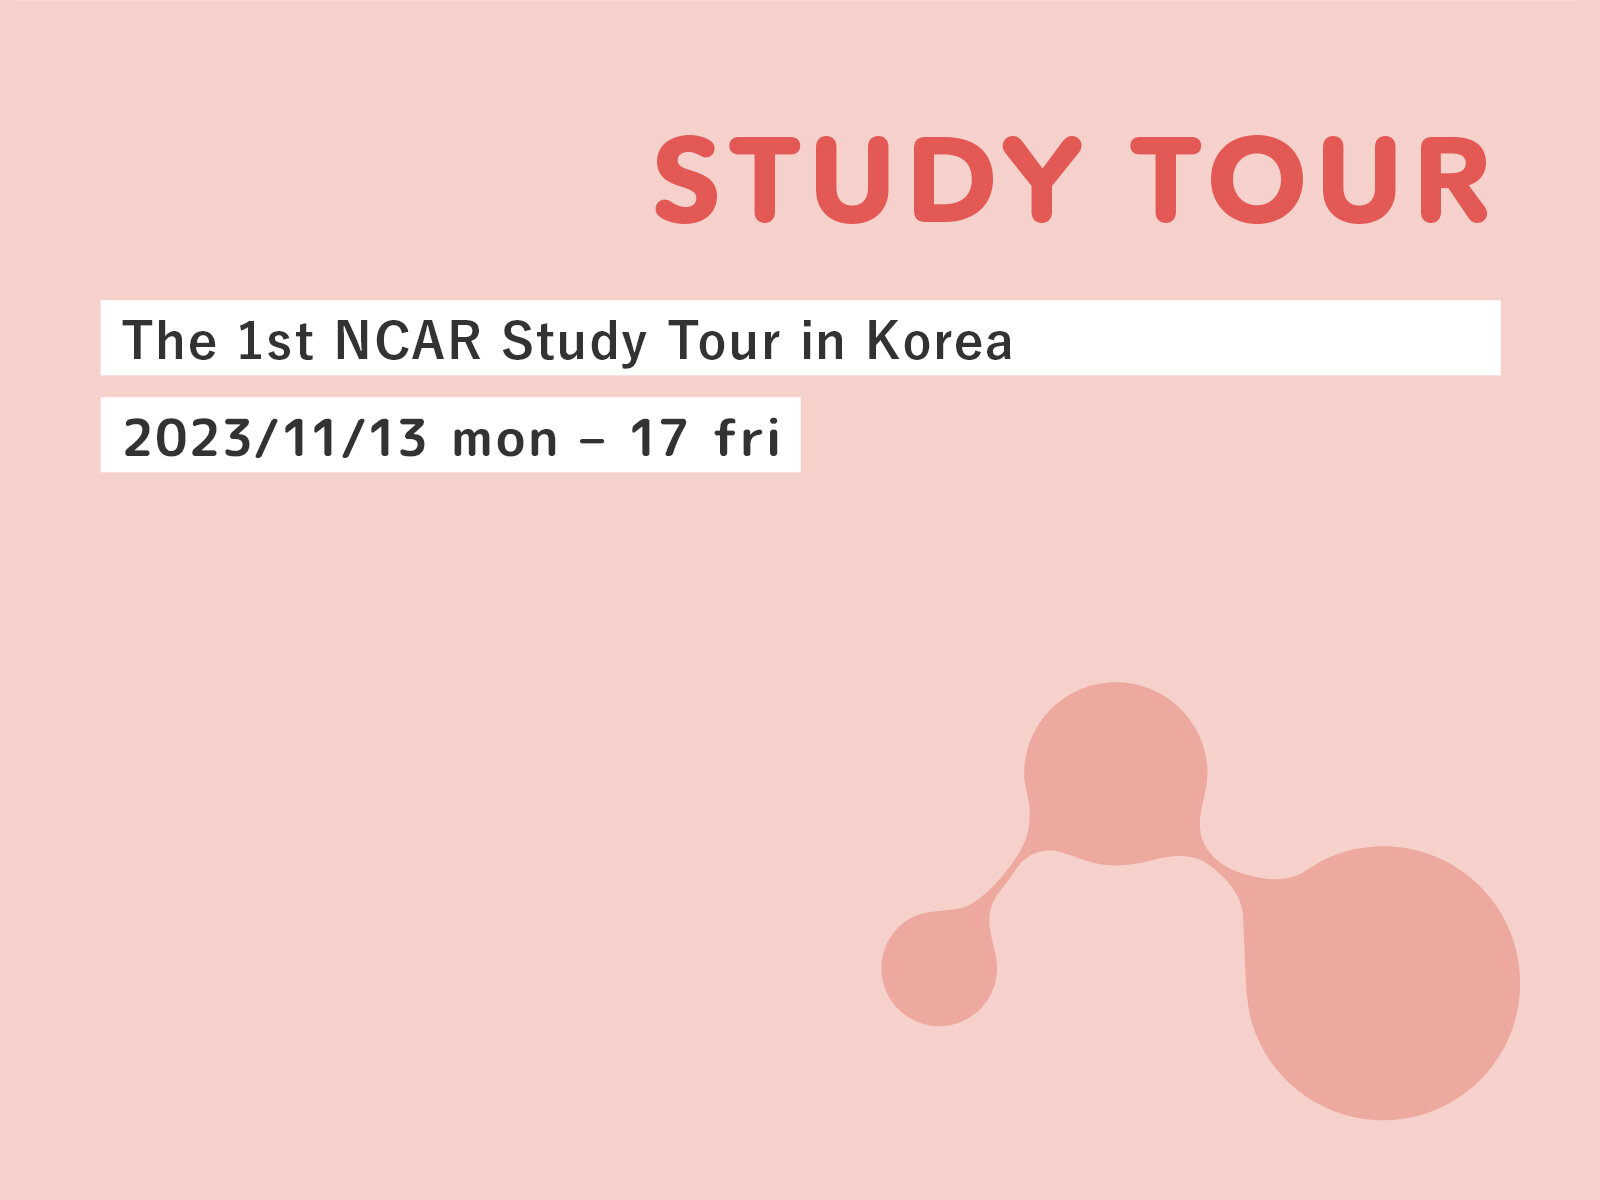 The 1st NCAR Study Tour in Korea

